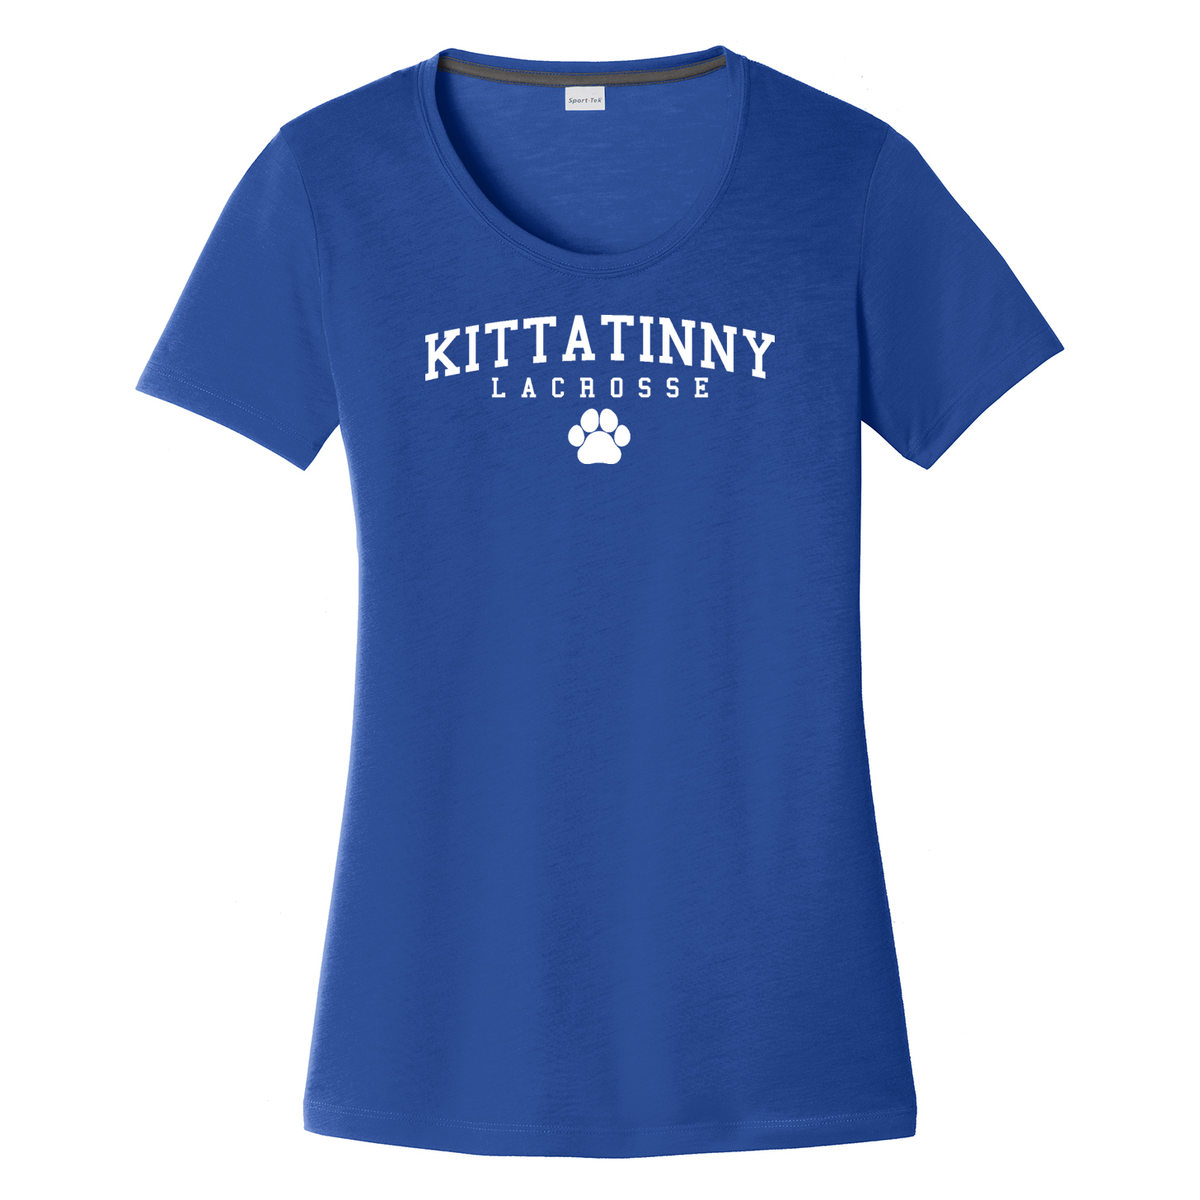 Kittatinny Lacrosse Women's CottonTouch Performance T-Shirt